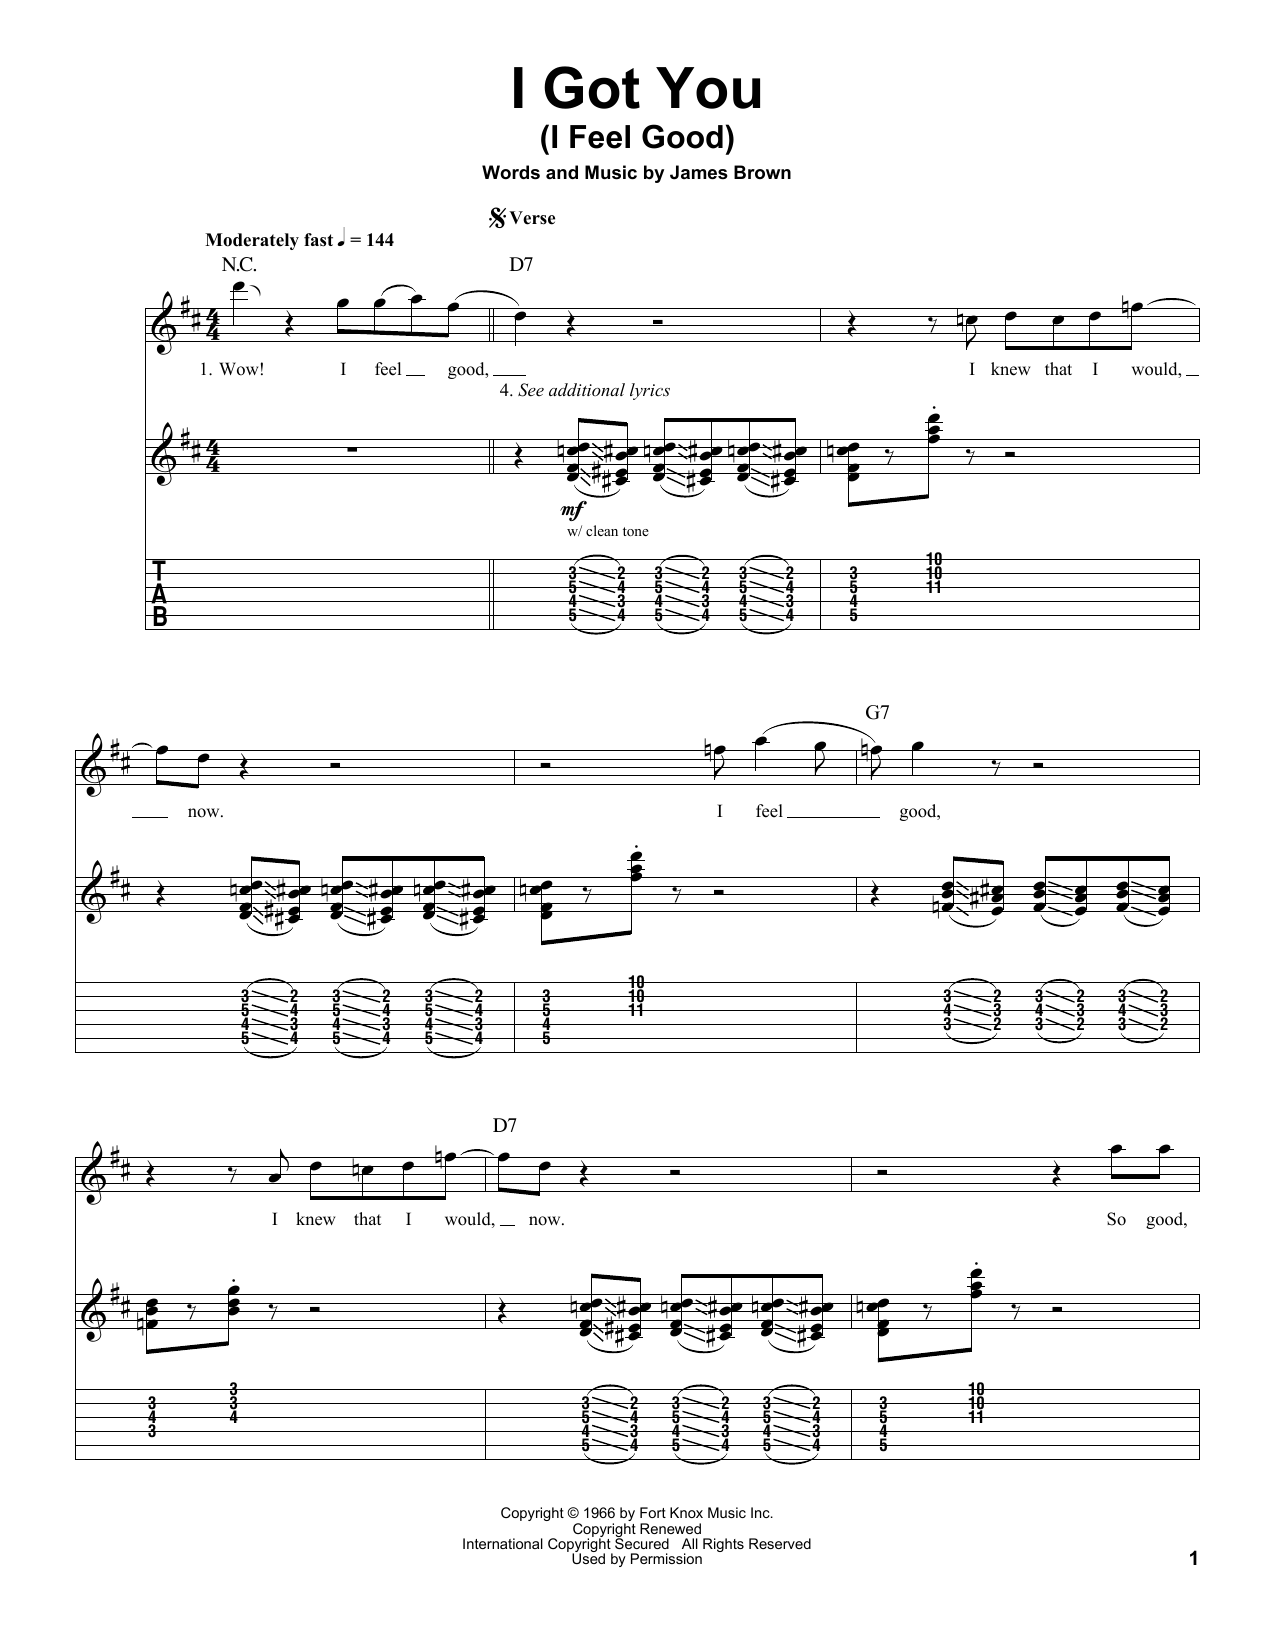 James Brown I Got You (I Feel Good) Sheet Music Notes & Chords for Melody Line, Lyrics & Chords - Download or Print PDF